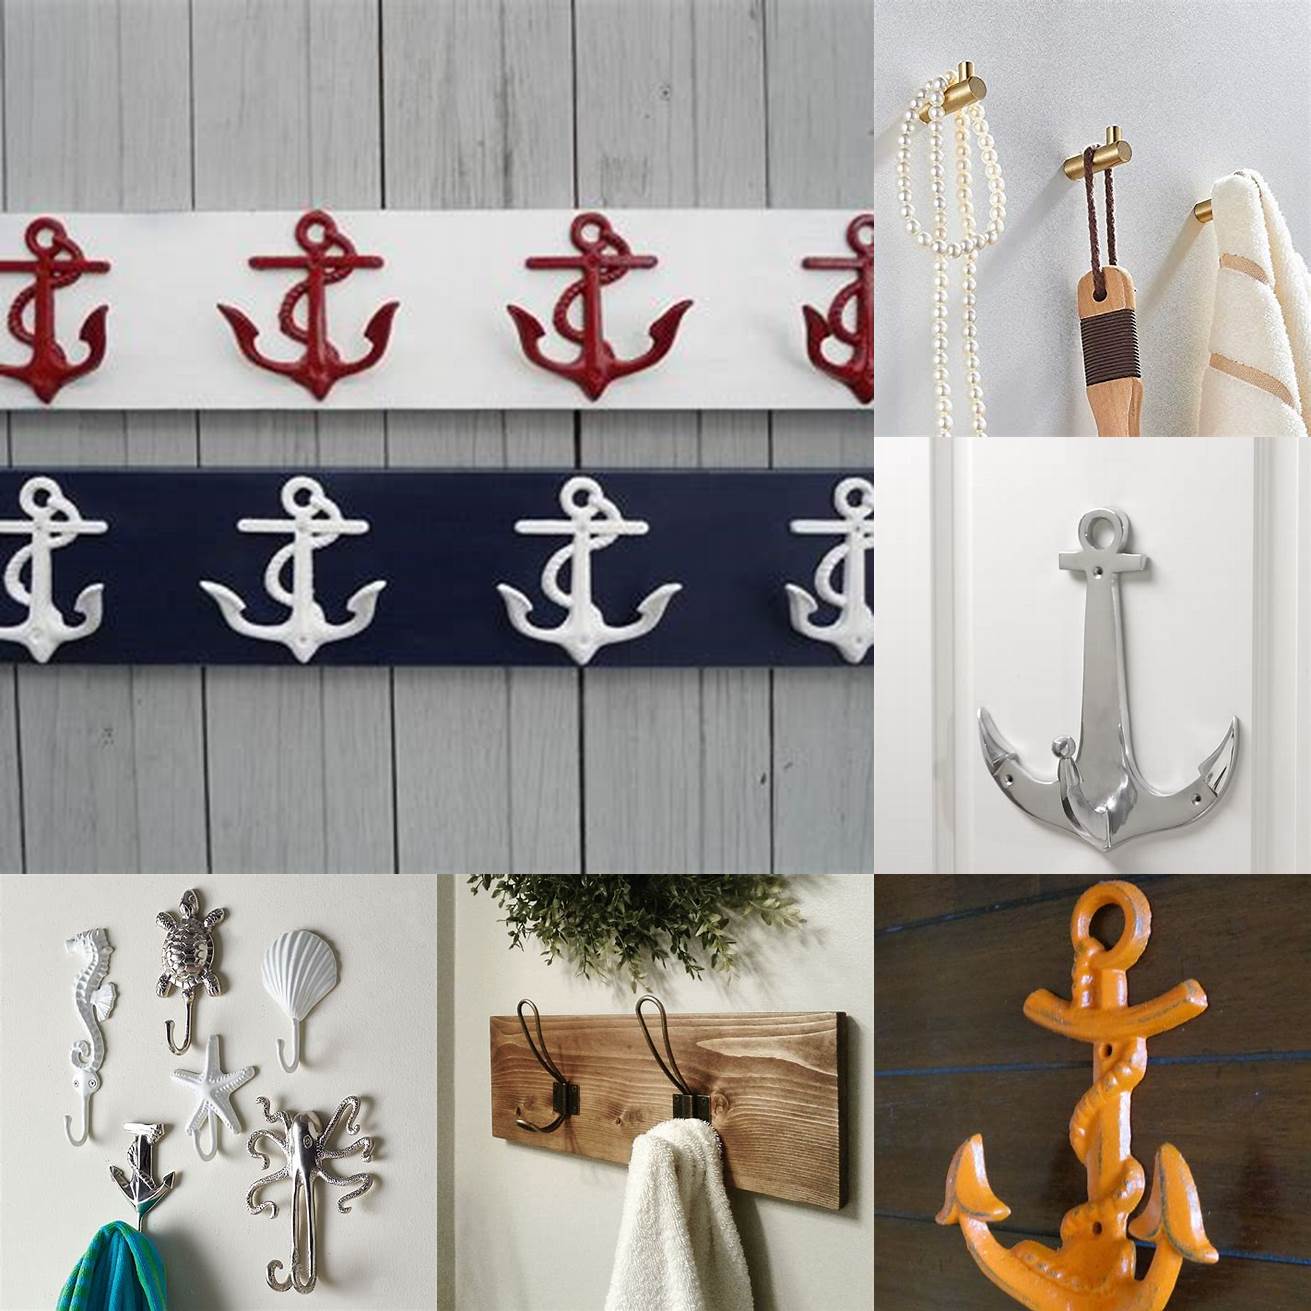 Anchor-shaped towel hooks